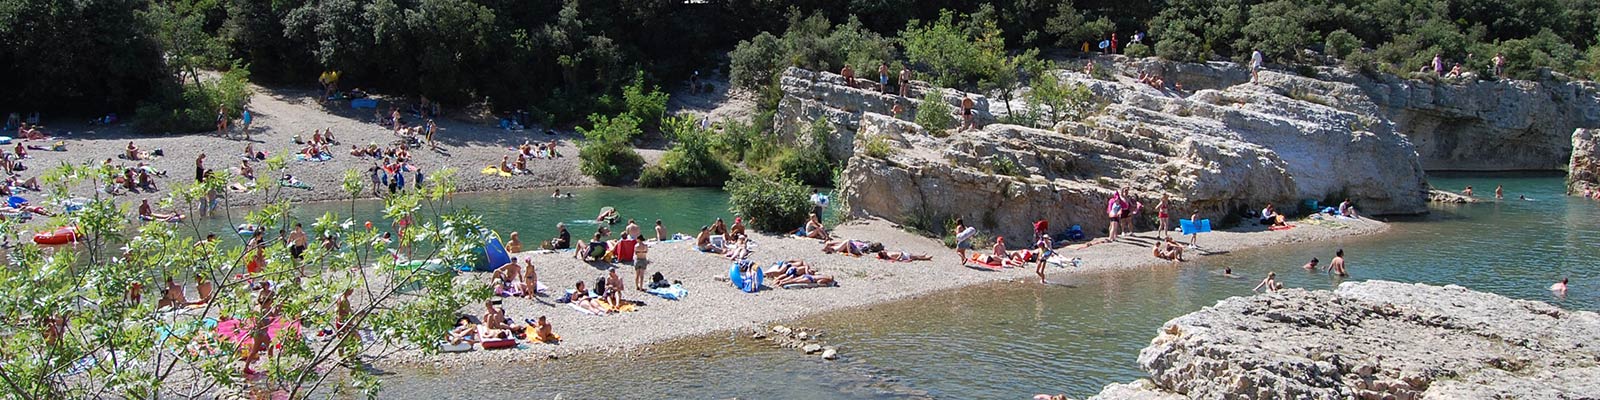 Camping en bord de rivière Gard